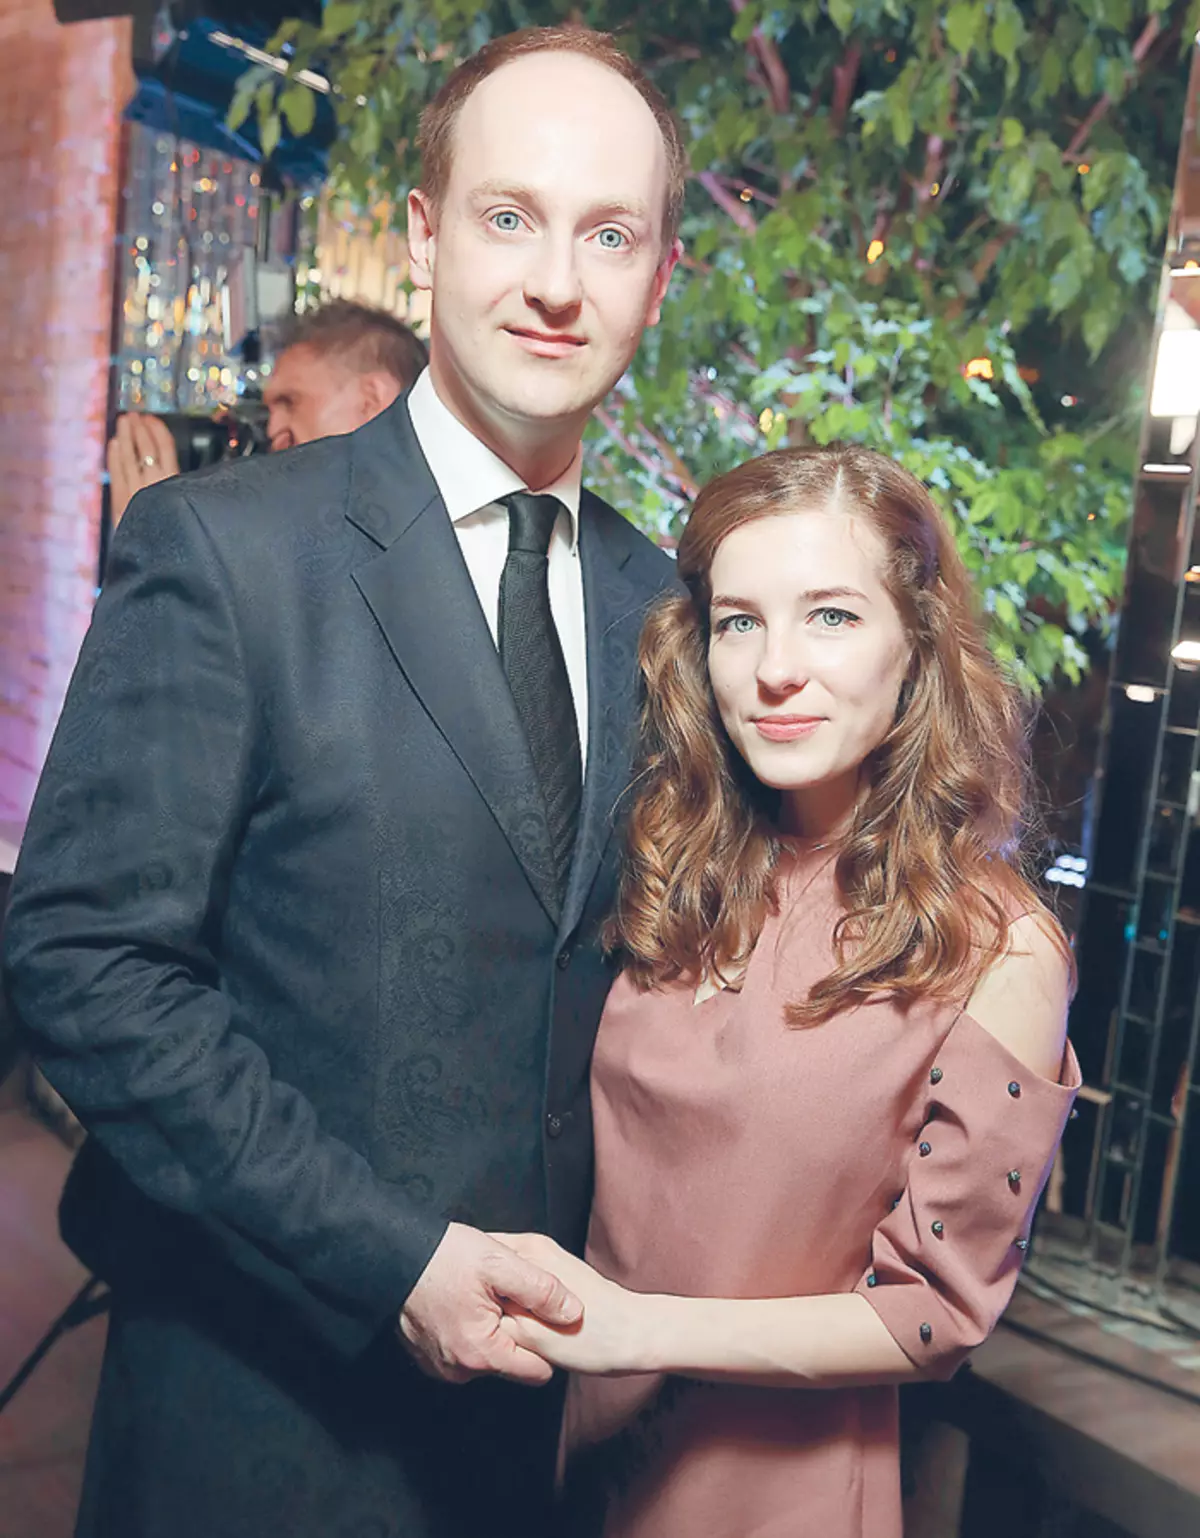 Nikita Tarasov and his spouse Marina three months ago became parents